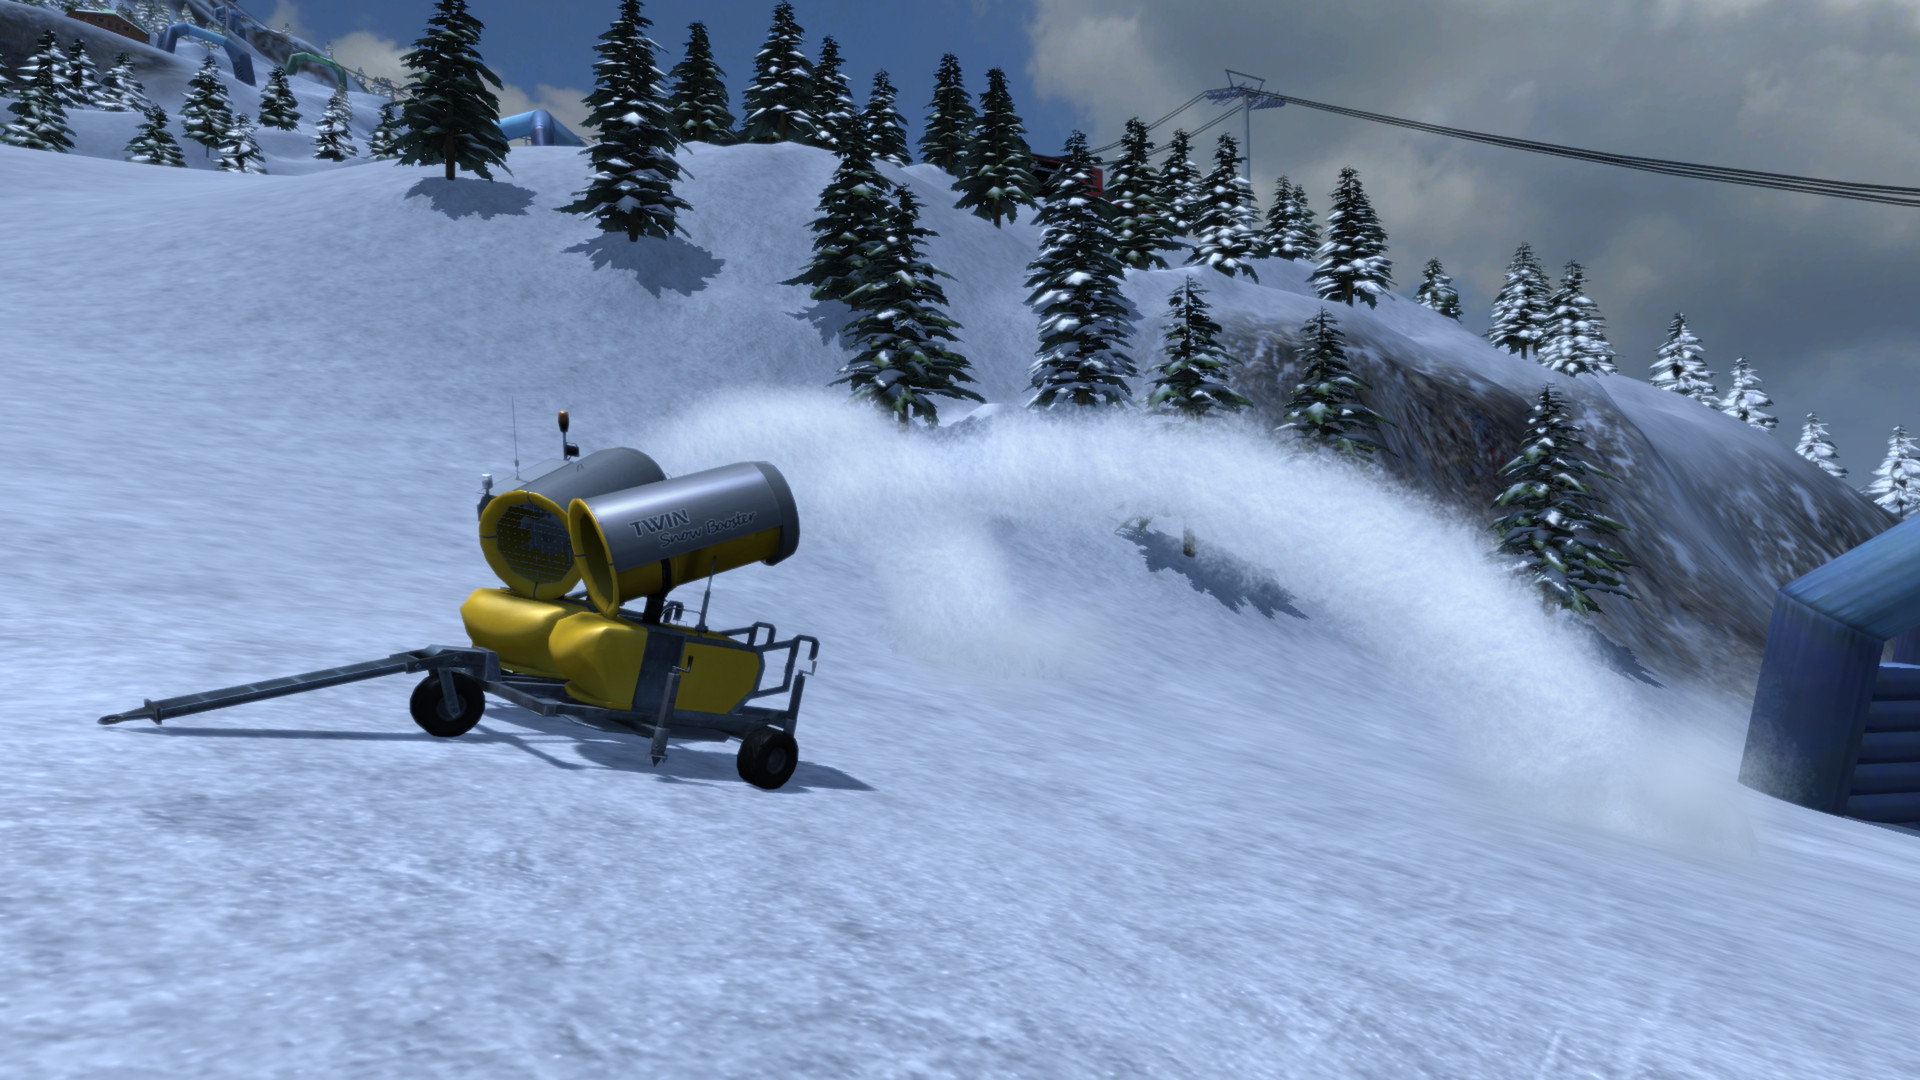 ski region simulator 2012 product key